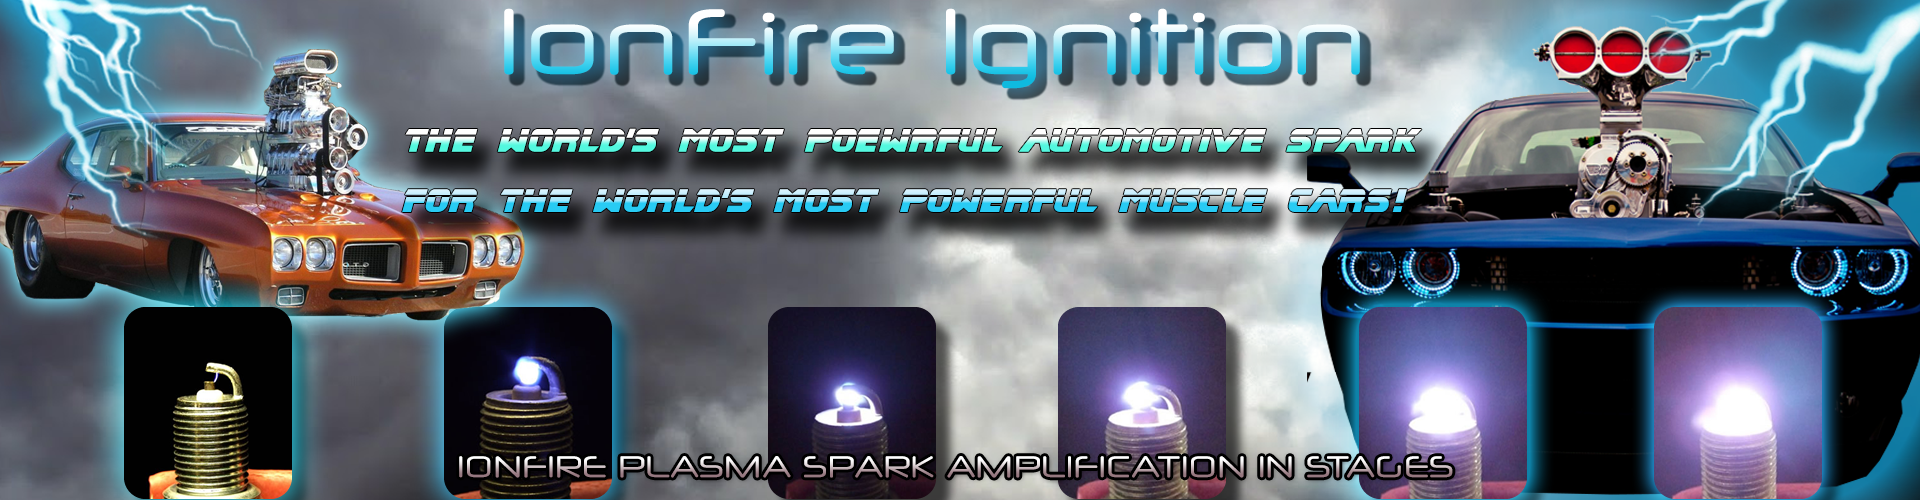 ionfire spark amplifier